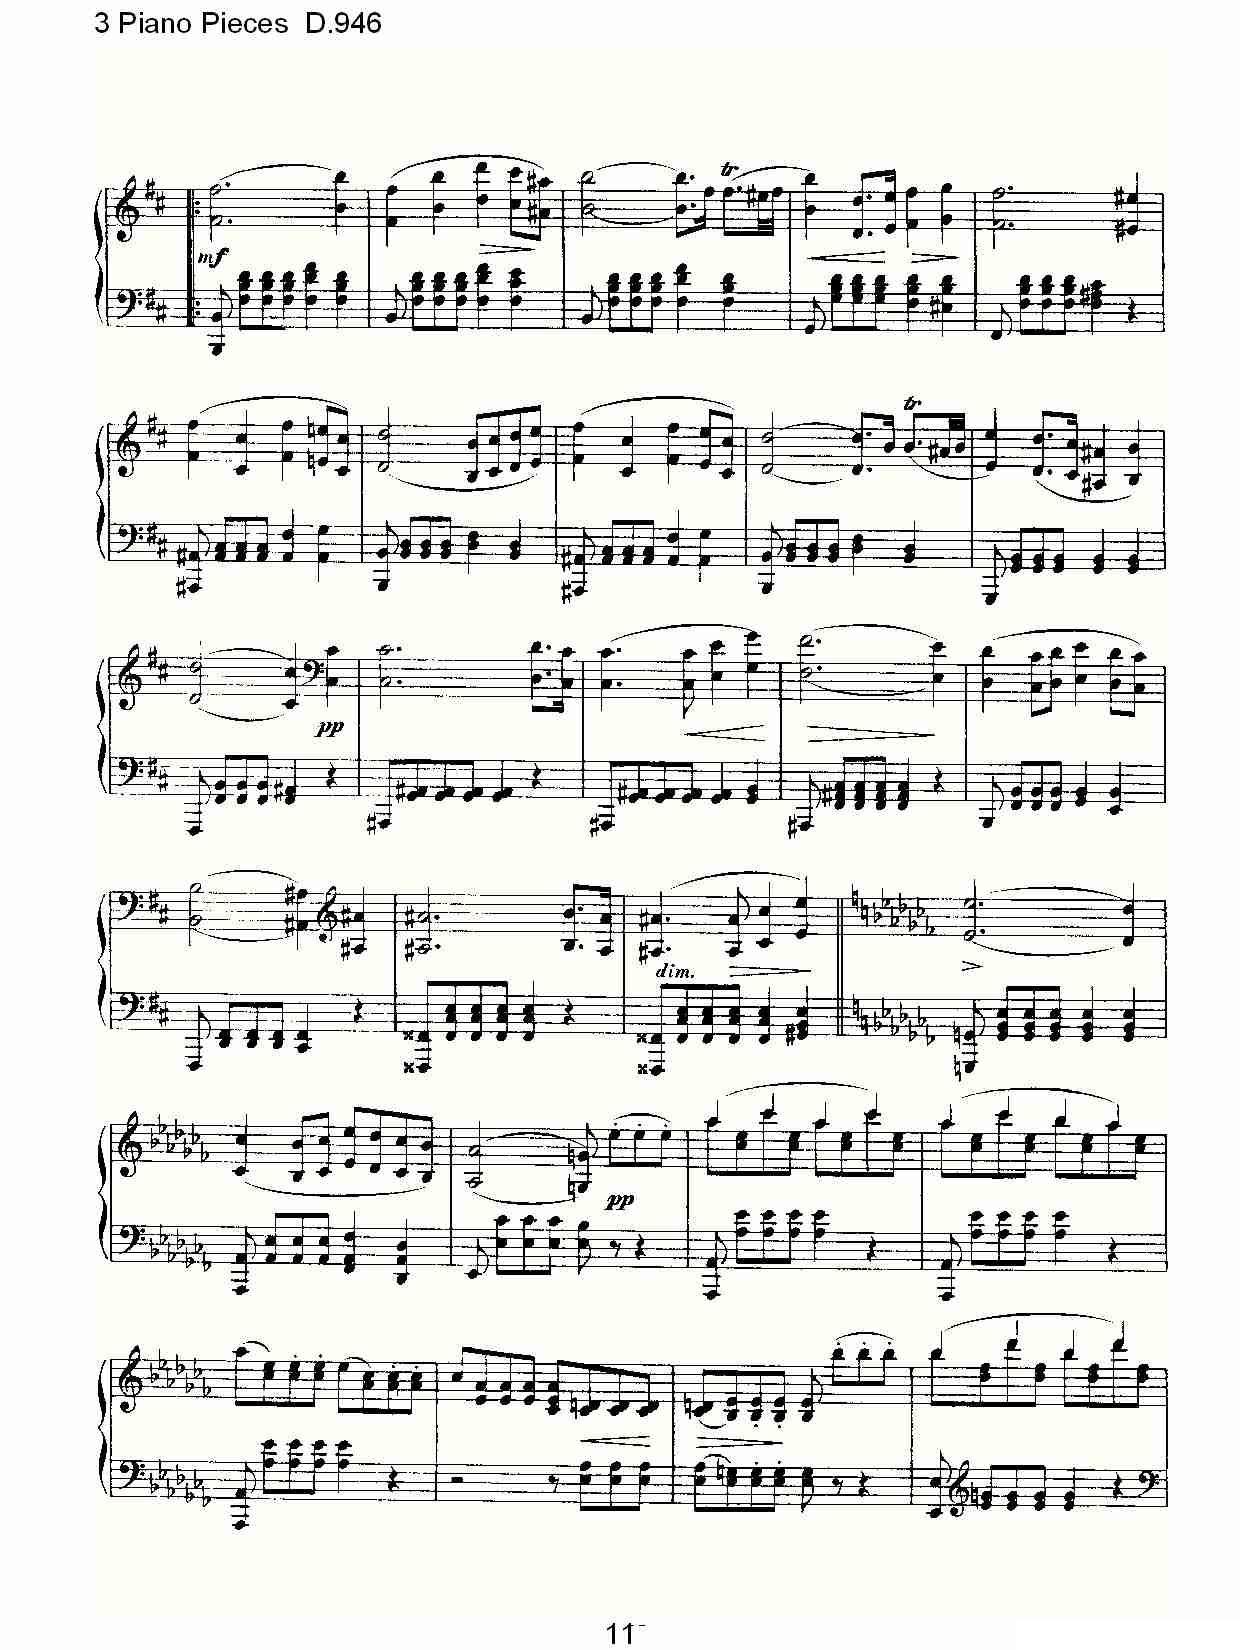 3 Piano Pieces D.946（钢琴三联奏D.946）钢琴曲谱（图11）